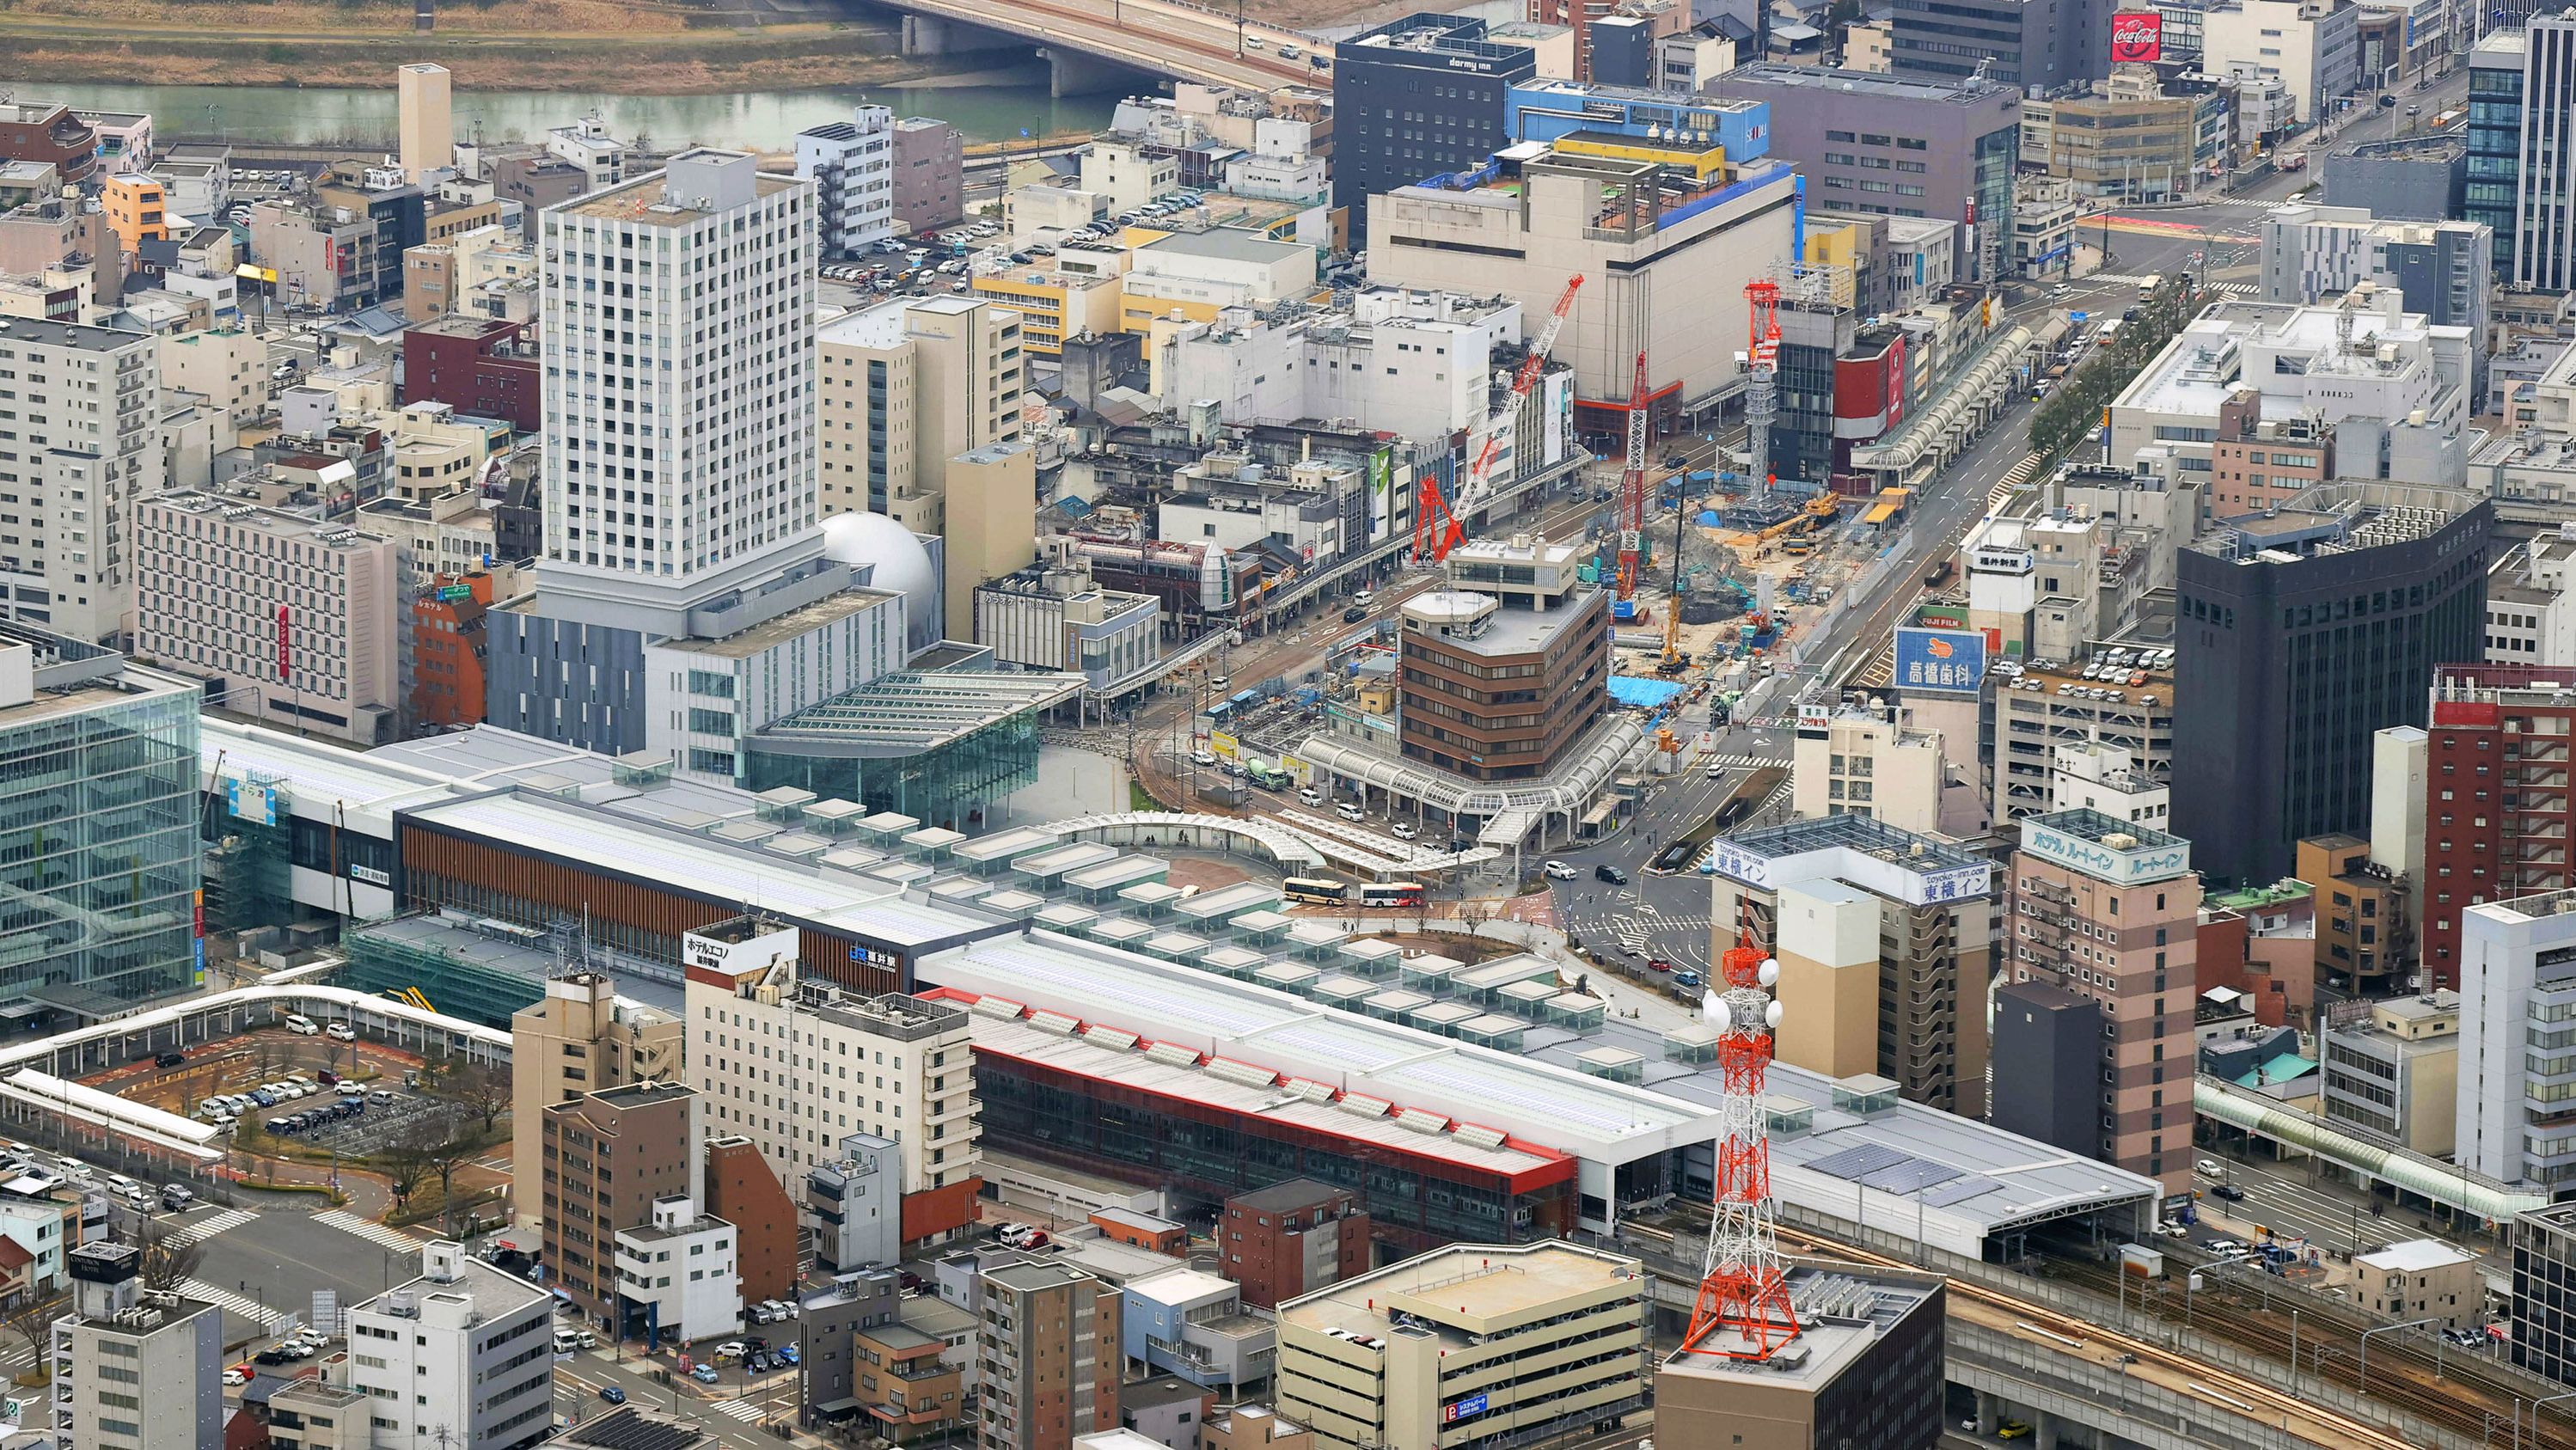 Fukui Station and surrounding area in Fukui City, Fukui Prefecture on March 29, 2022.